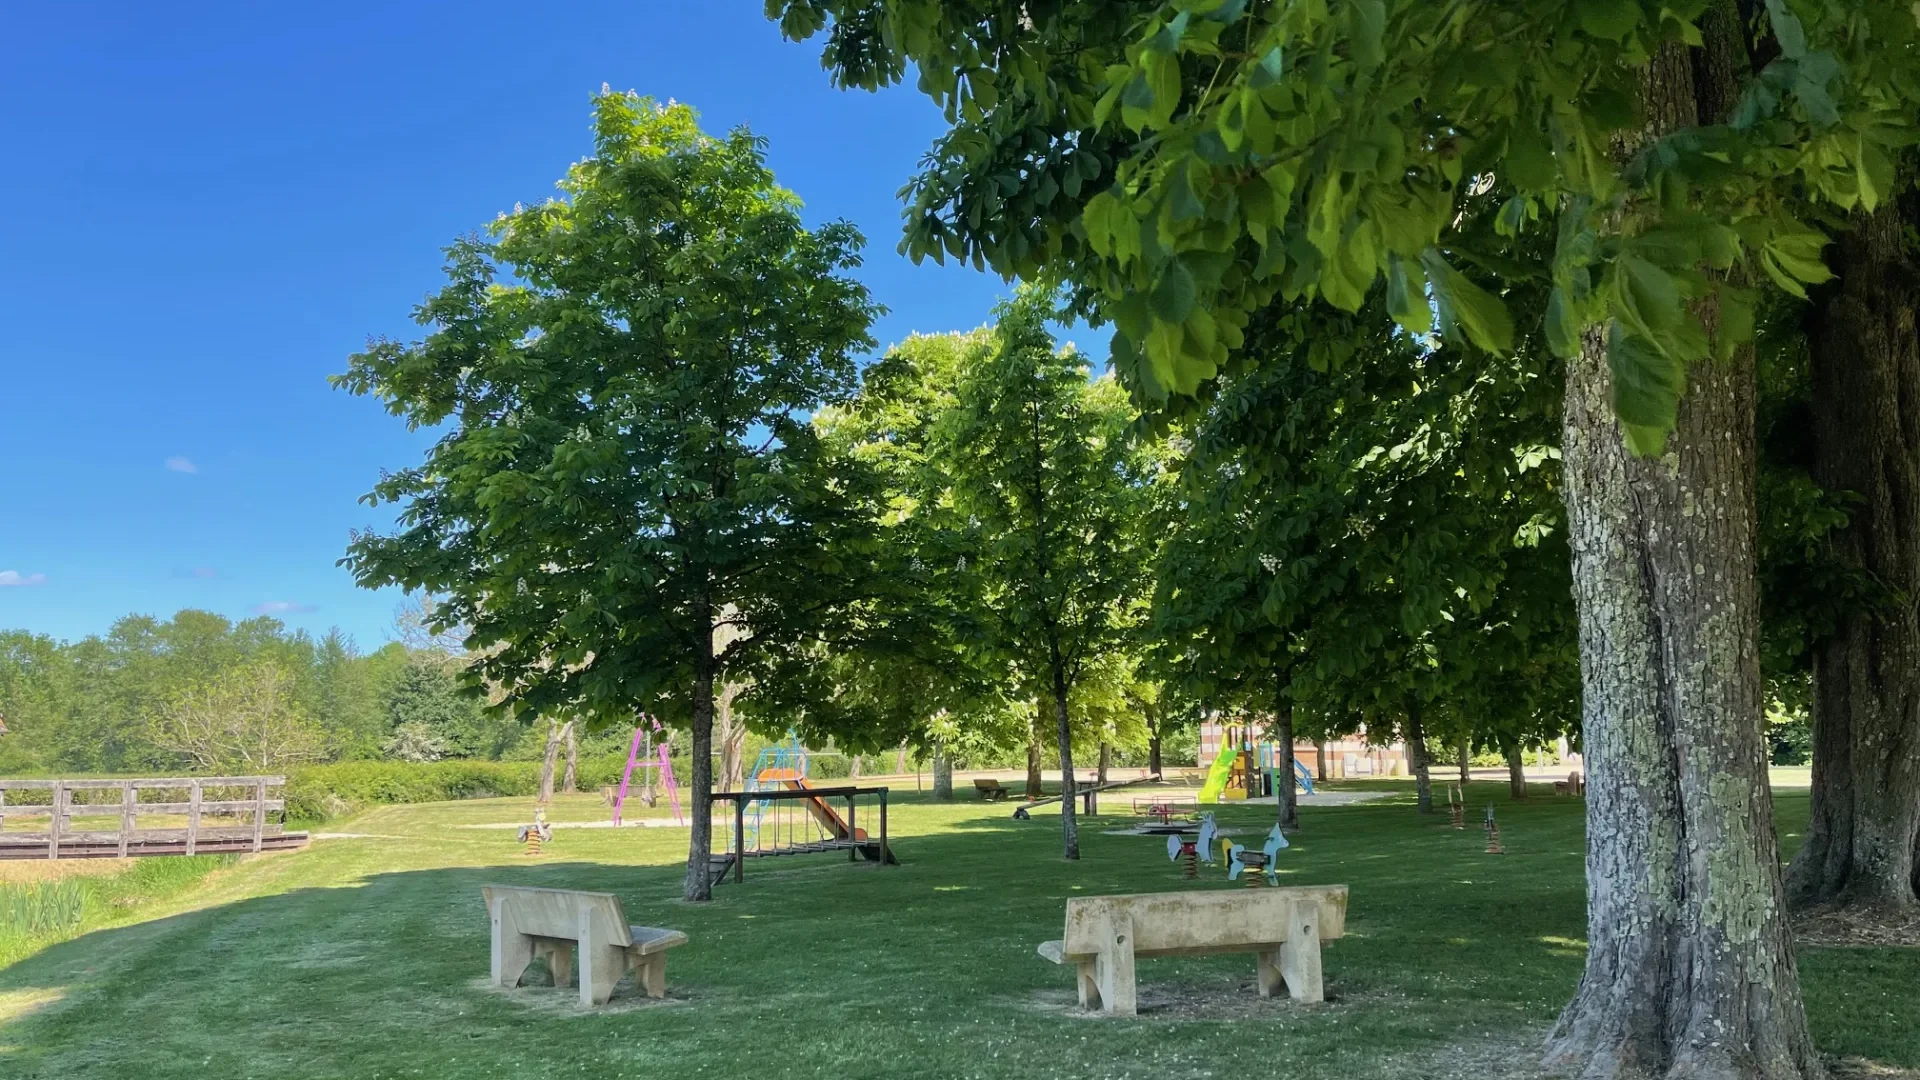 le Pâtis, picnic and play area in Villiers-Saint-Benoit